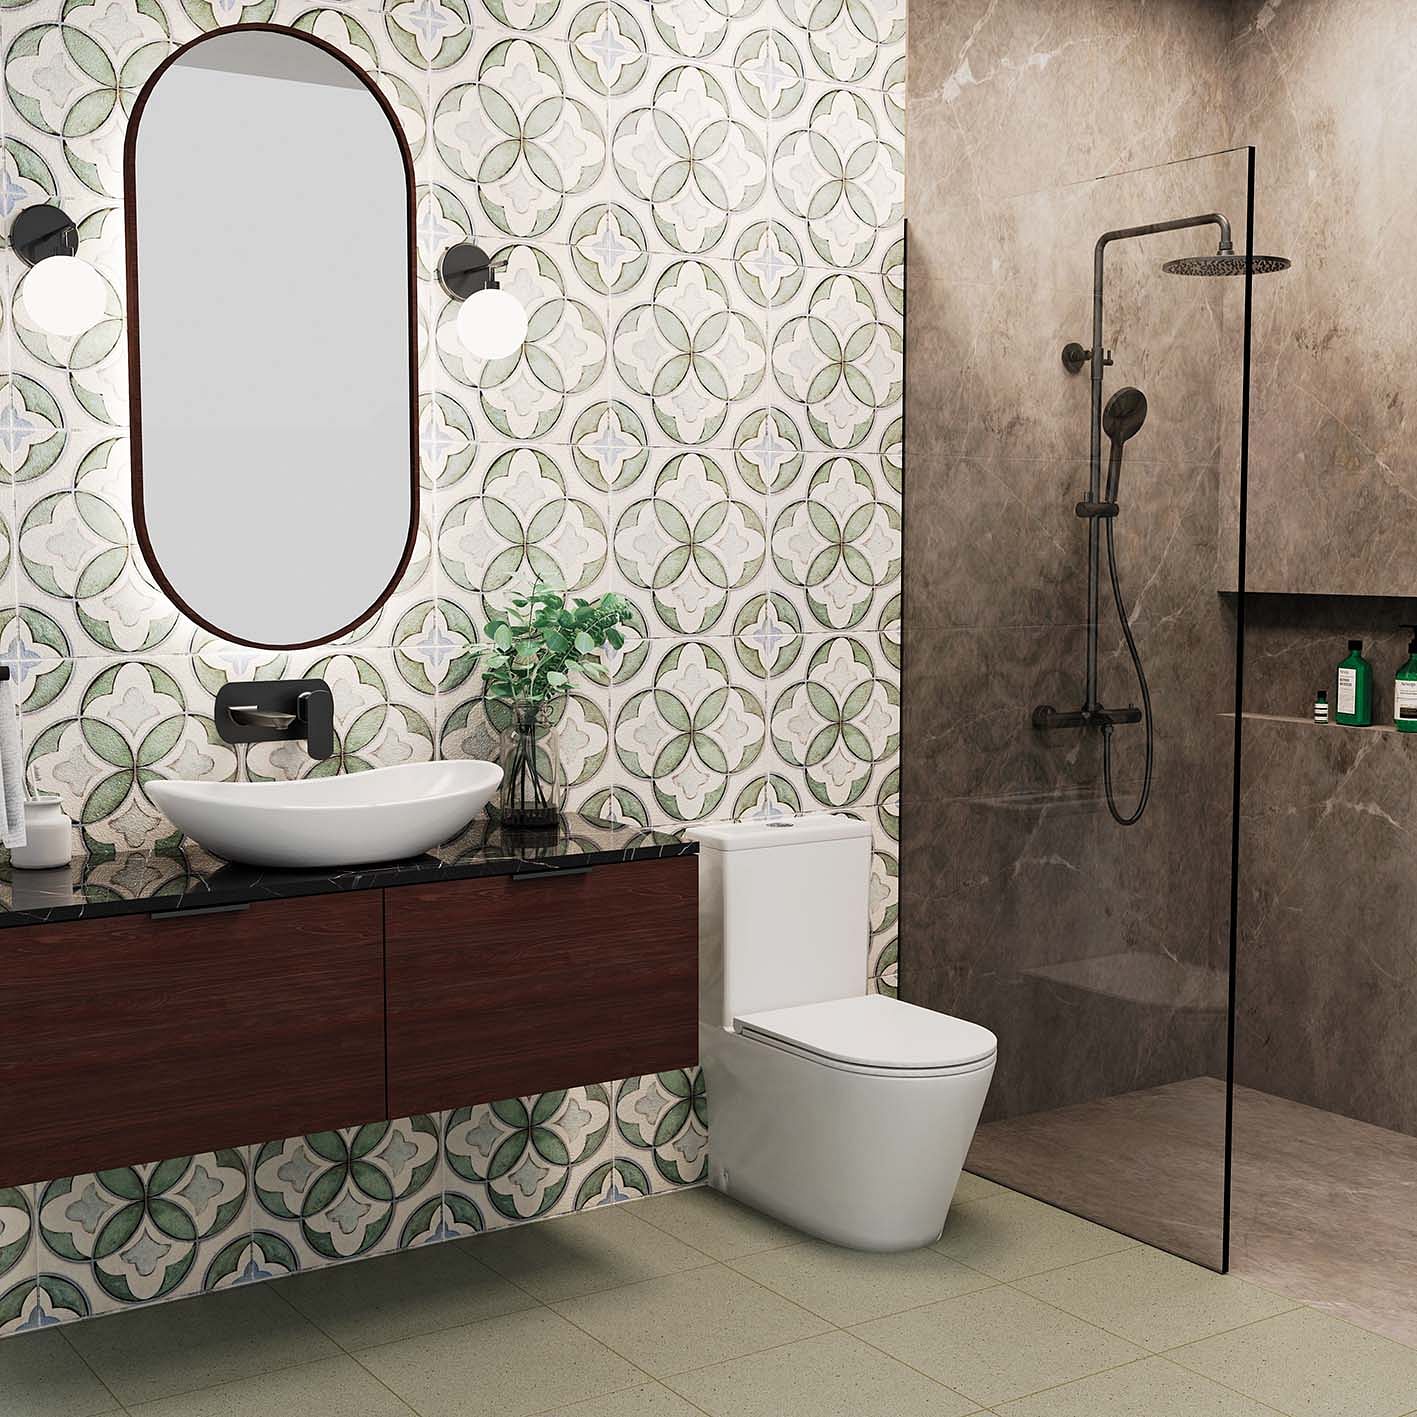 Bathroom with sanitary bathroom fittings from premium sanitary ware brand Rigel